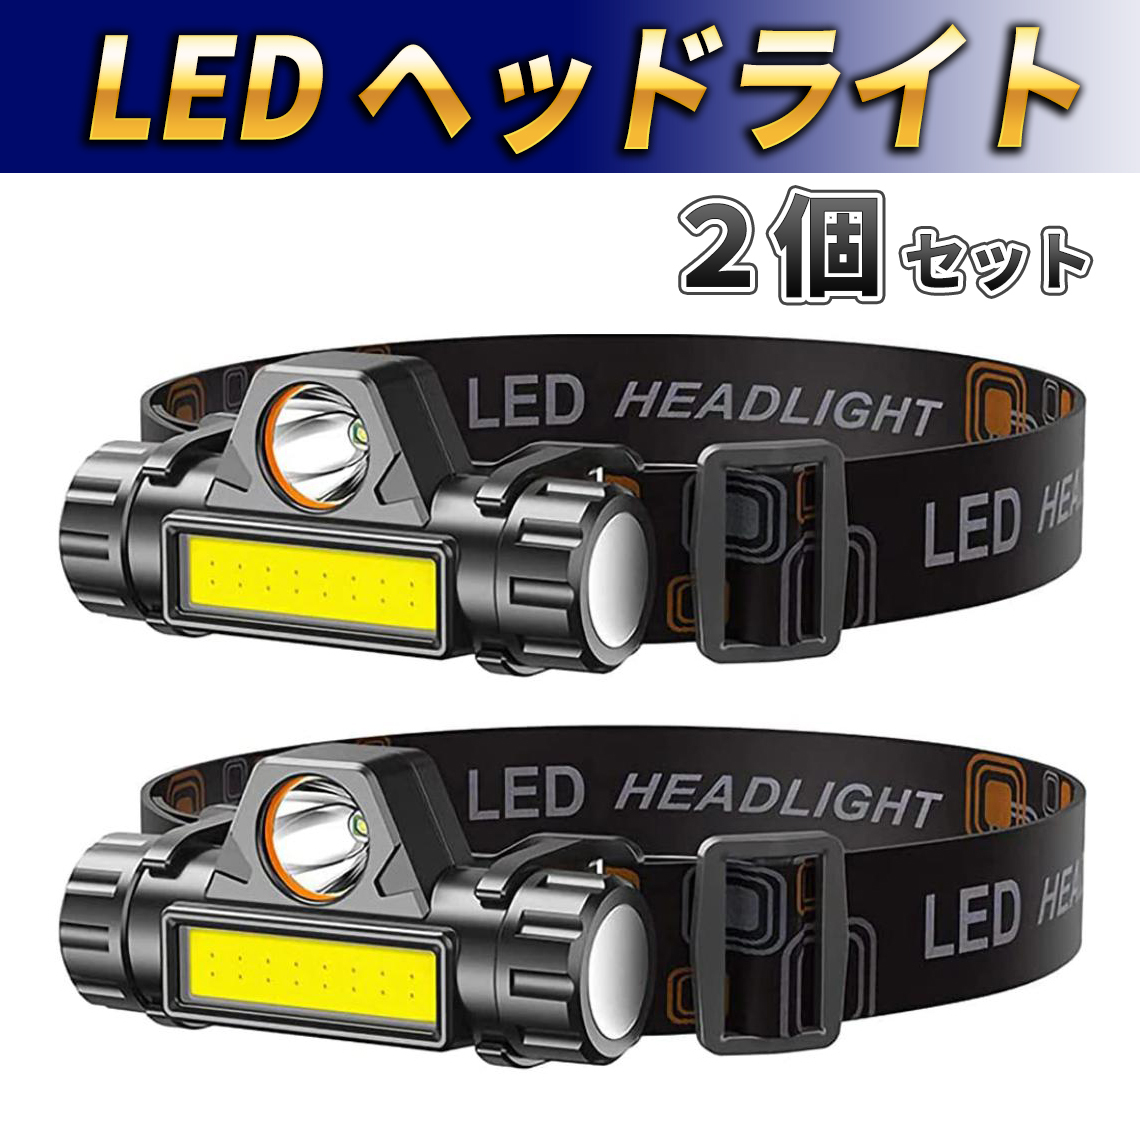 LED ヘッドライト 2個セット USB充電式 ヘッドランプ 高輝度 小型軽量 COB 懐中電灯 作業灯 ワークライト 防災 釣り 登山 キャンプ 防水_画像1